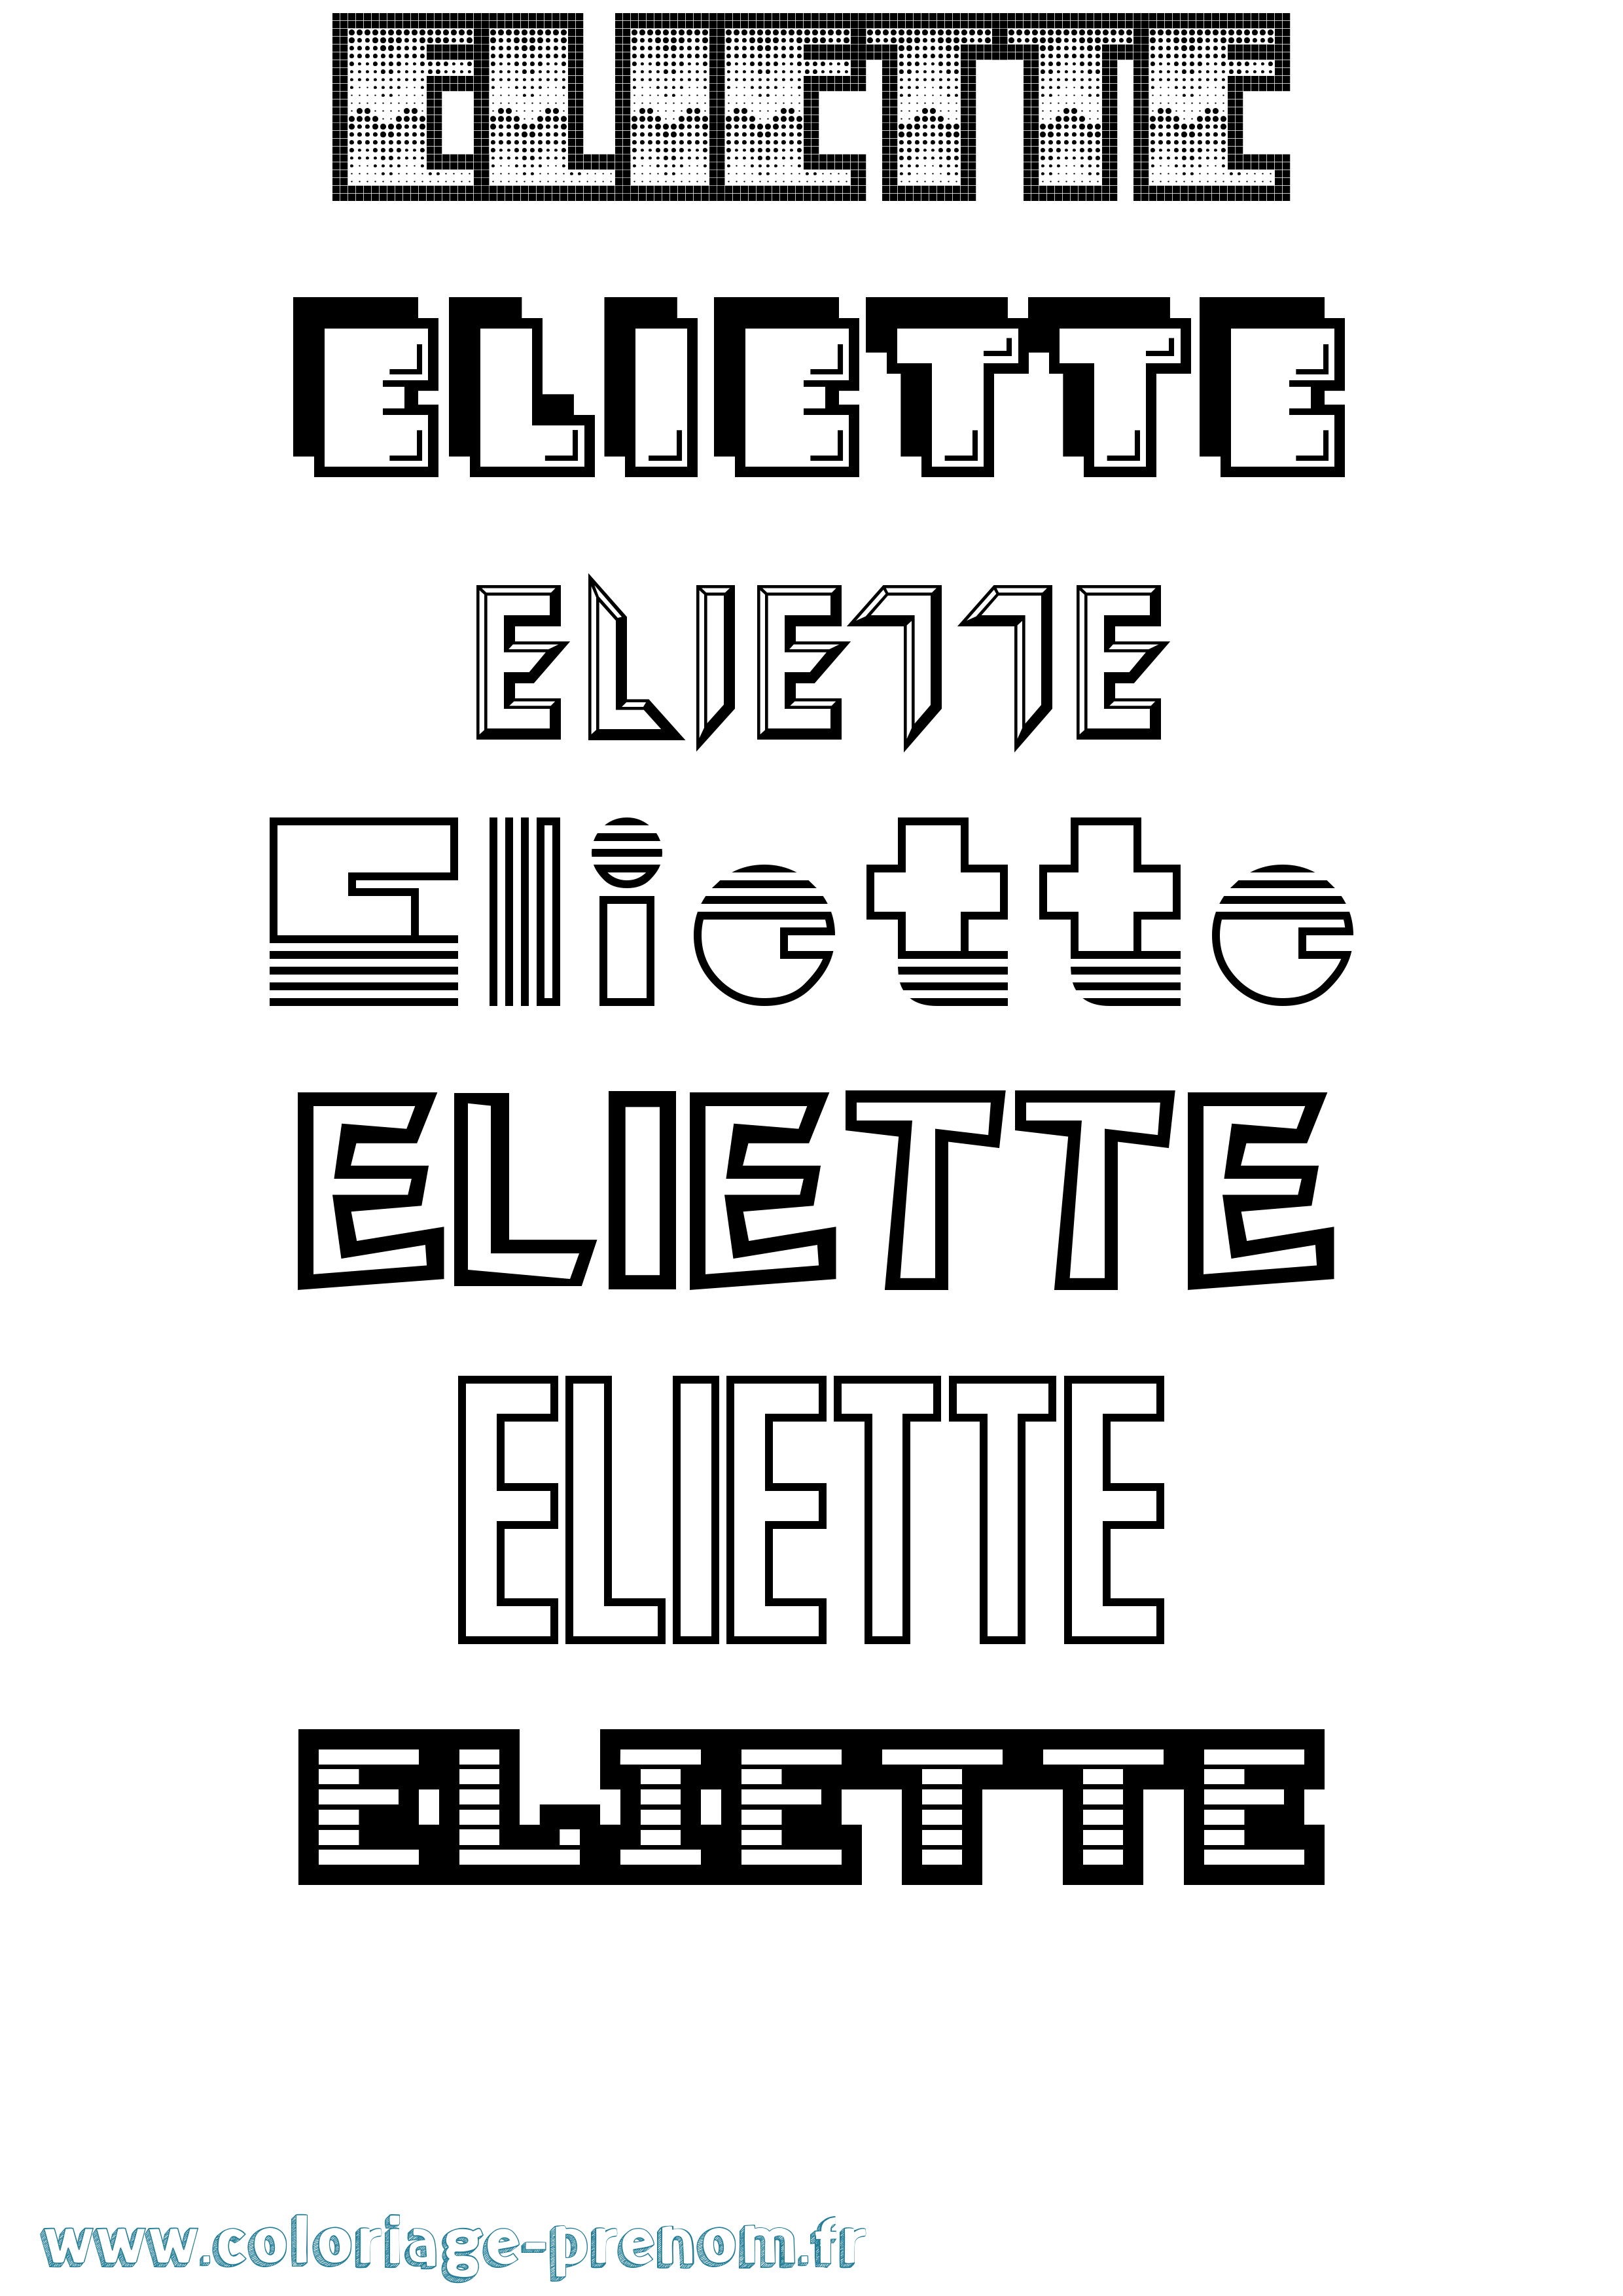 Coloriage prénom Eliette